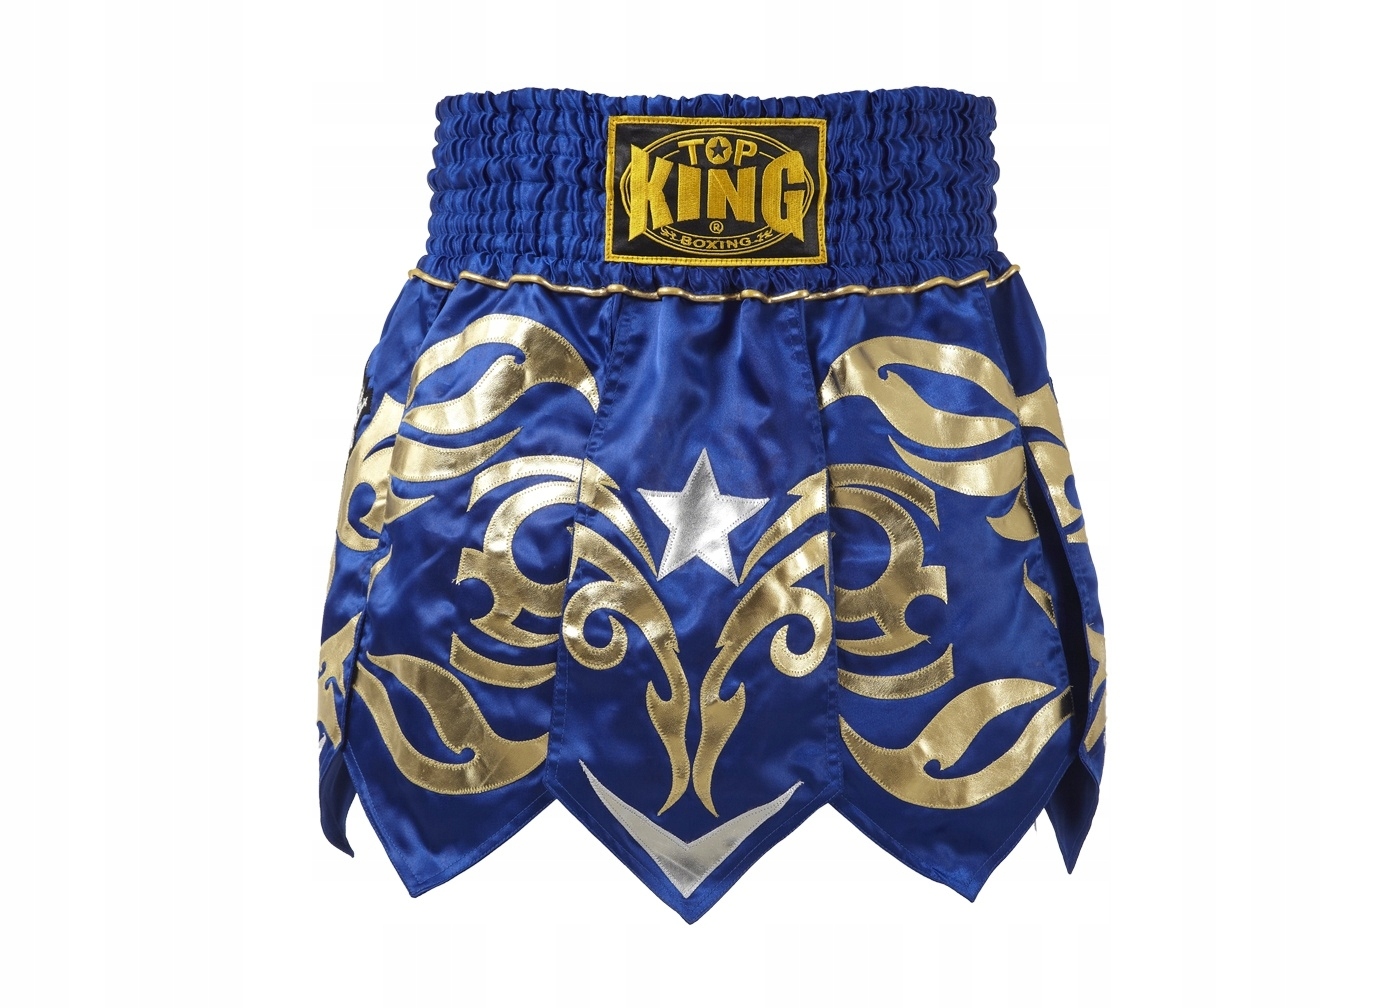 Boxing Shorts Muay Thai Top King XL